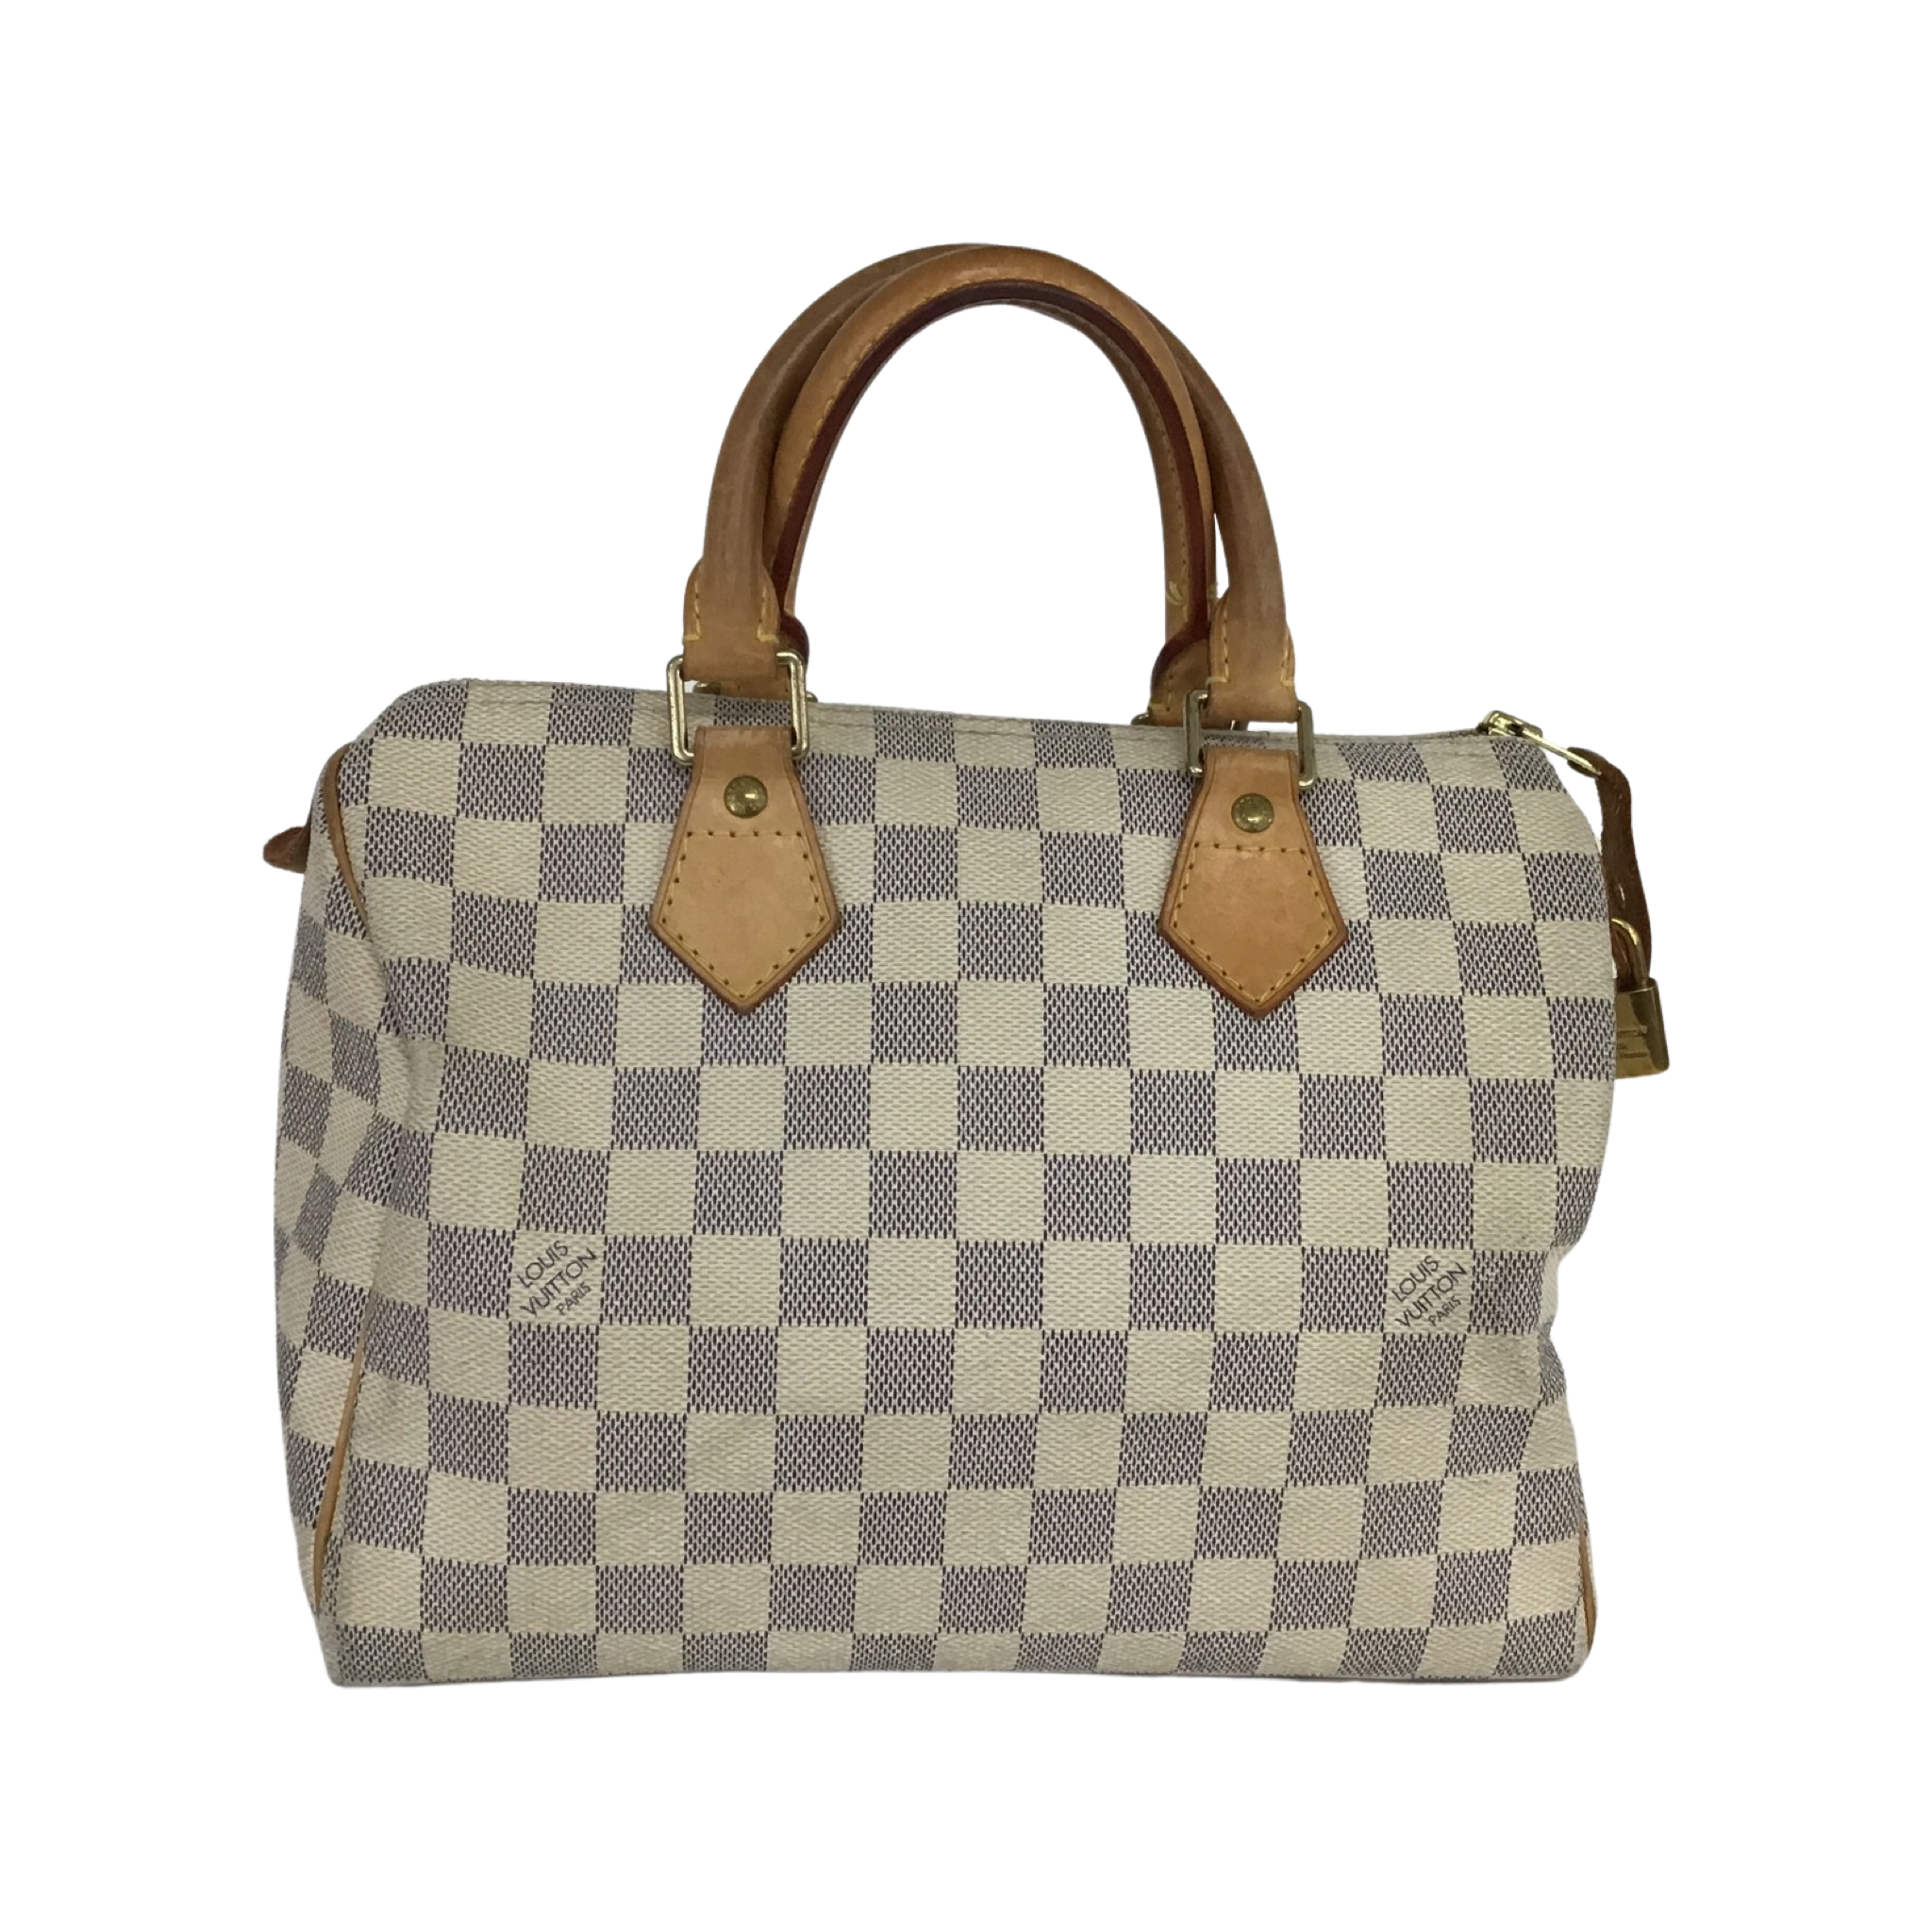 Louis Vuitton-Damier Azur Speedy 25 Handbag - Couture Traders